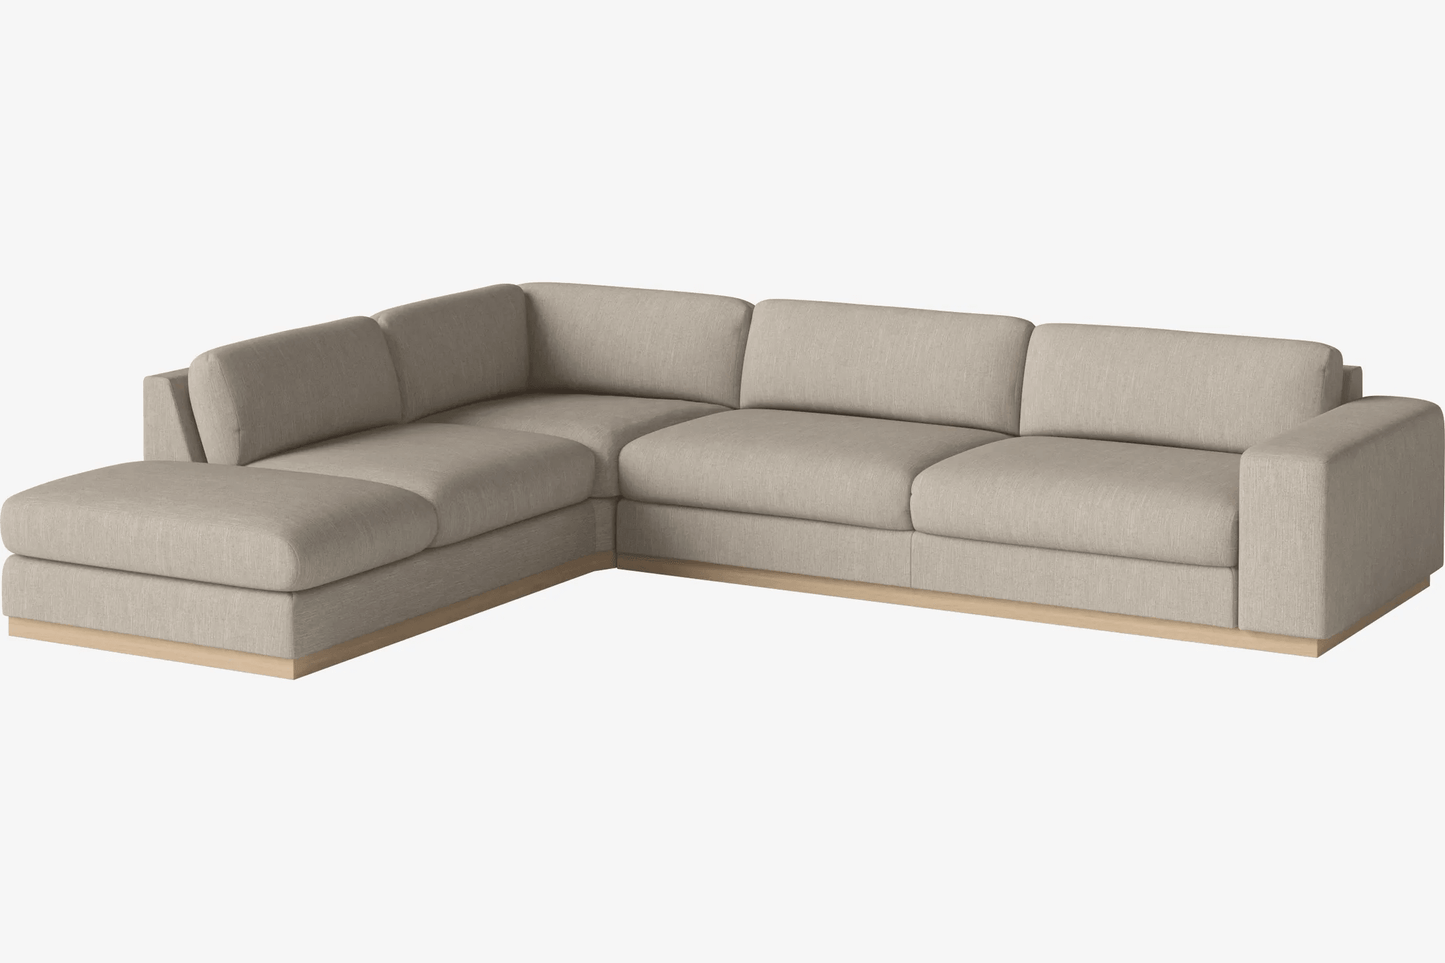 Hudoo Sofa 5-Seater Open End